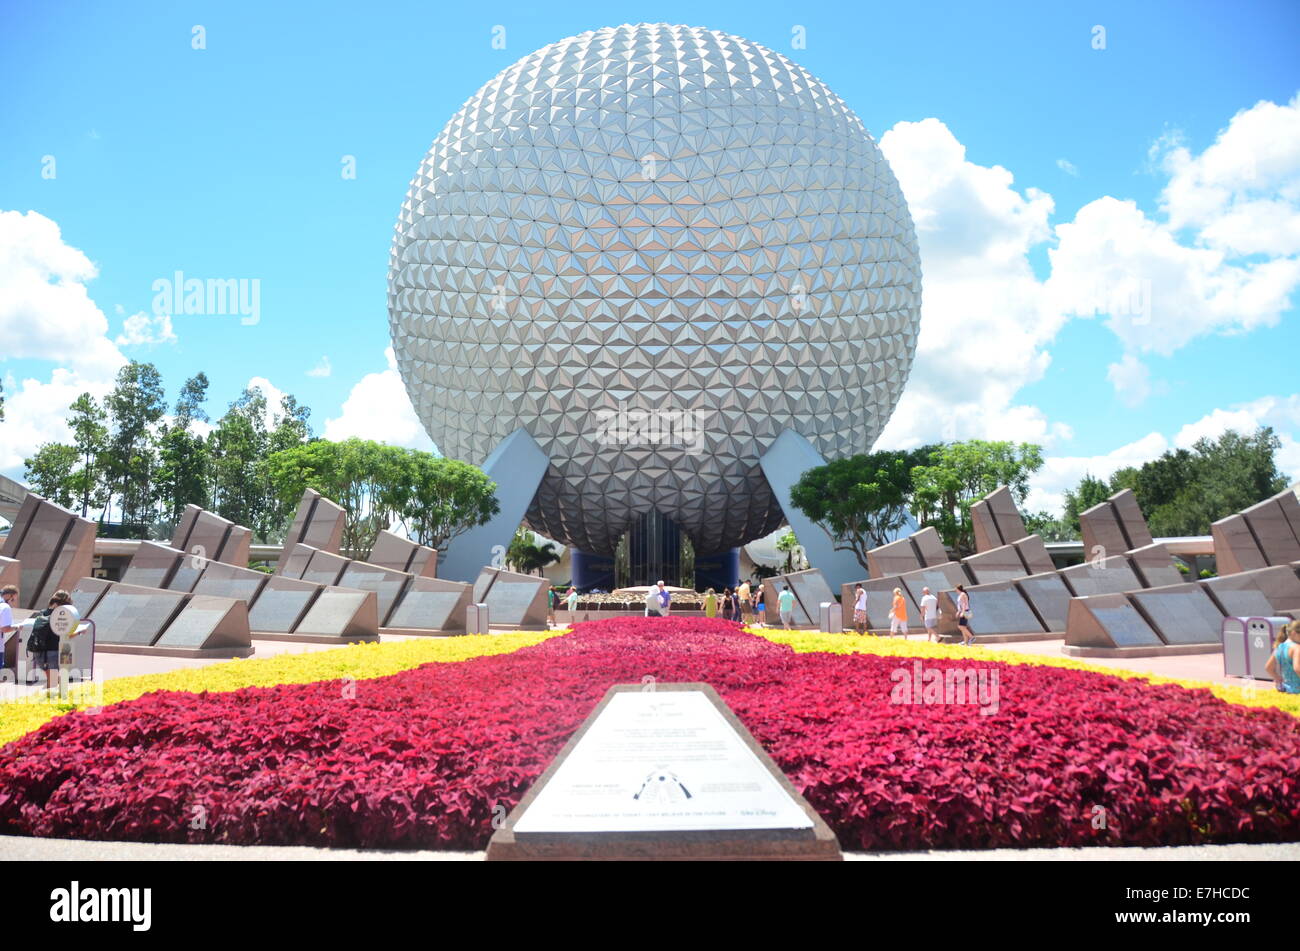 Epcot Center at Walt Disney World, Orlando, Florida, USA